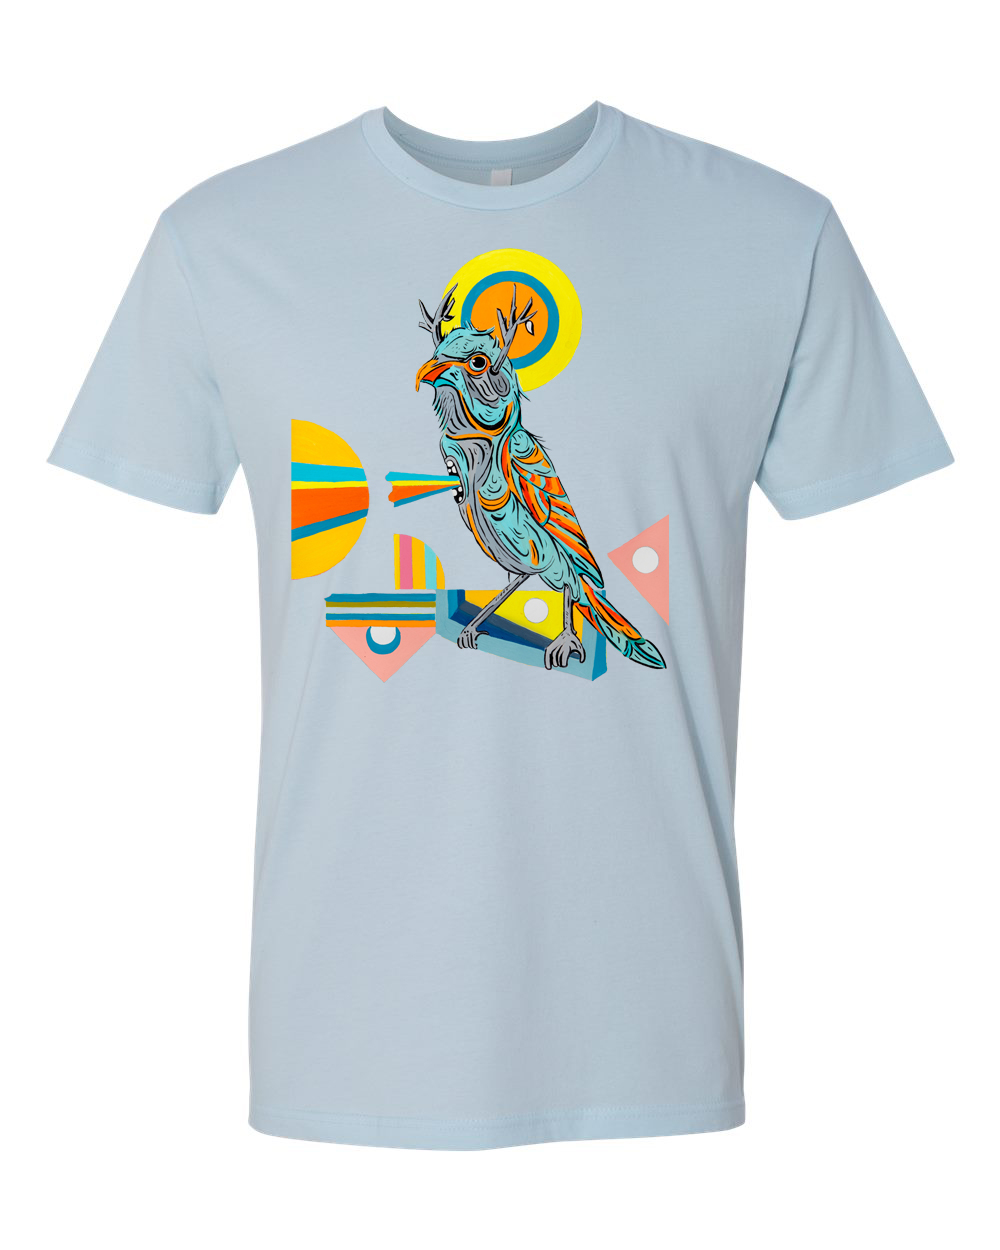 Maxx Feist “Bird” Unisex T-Shirt